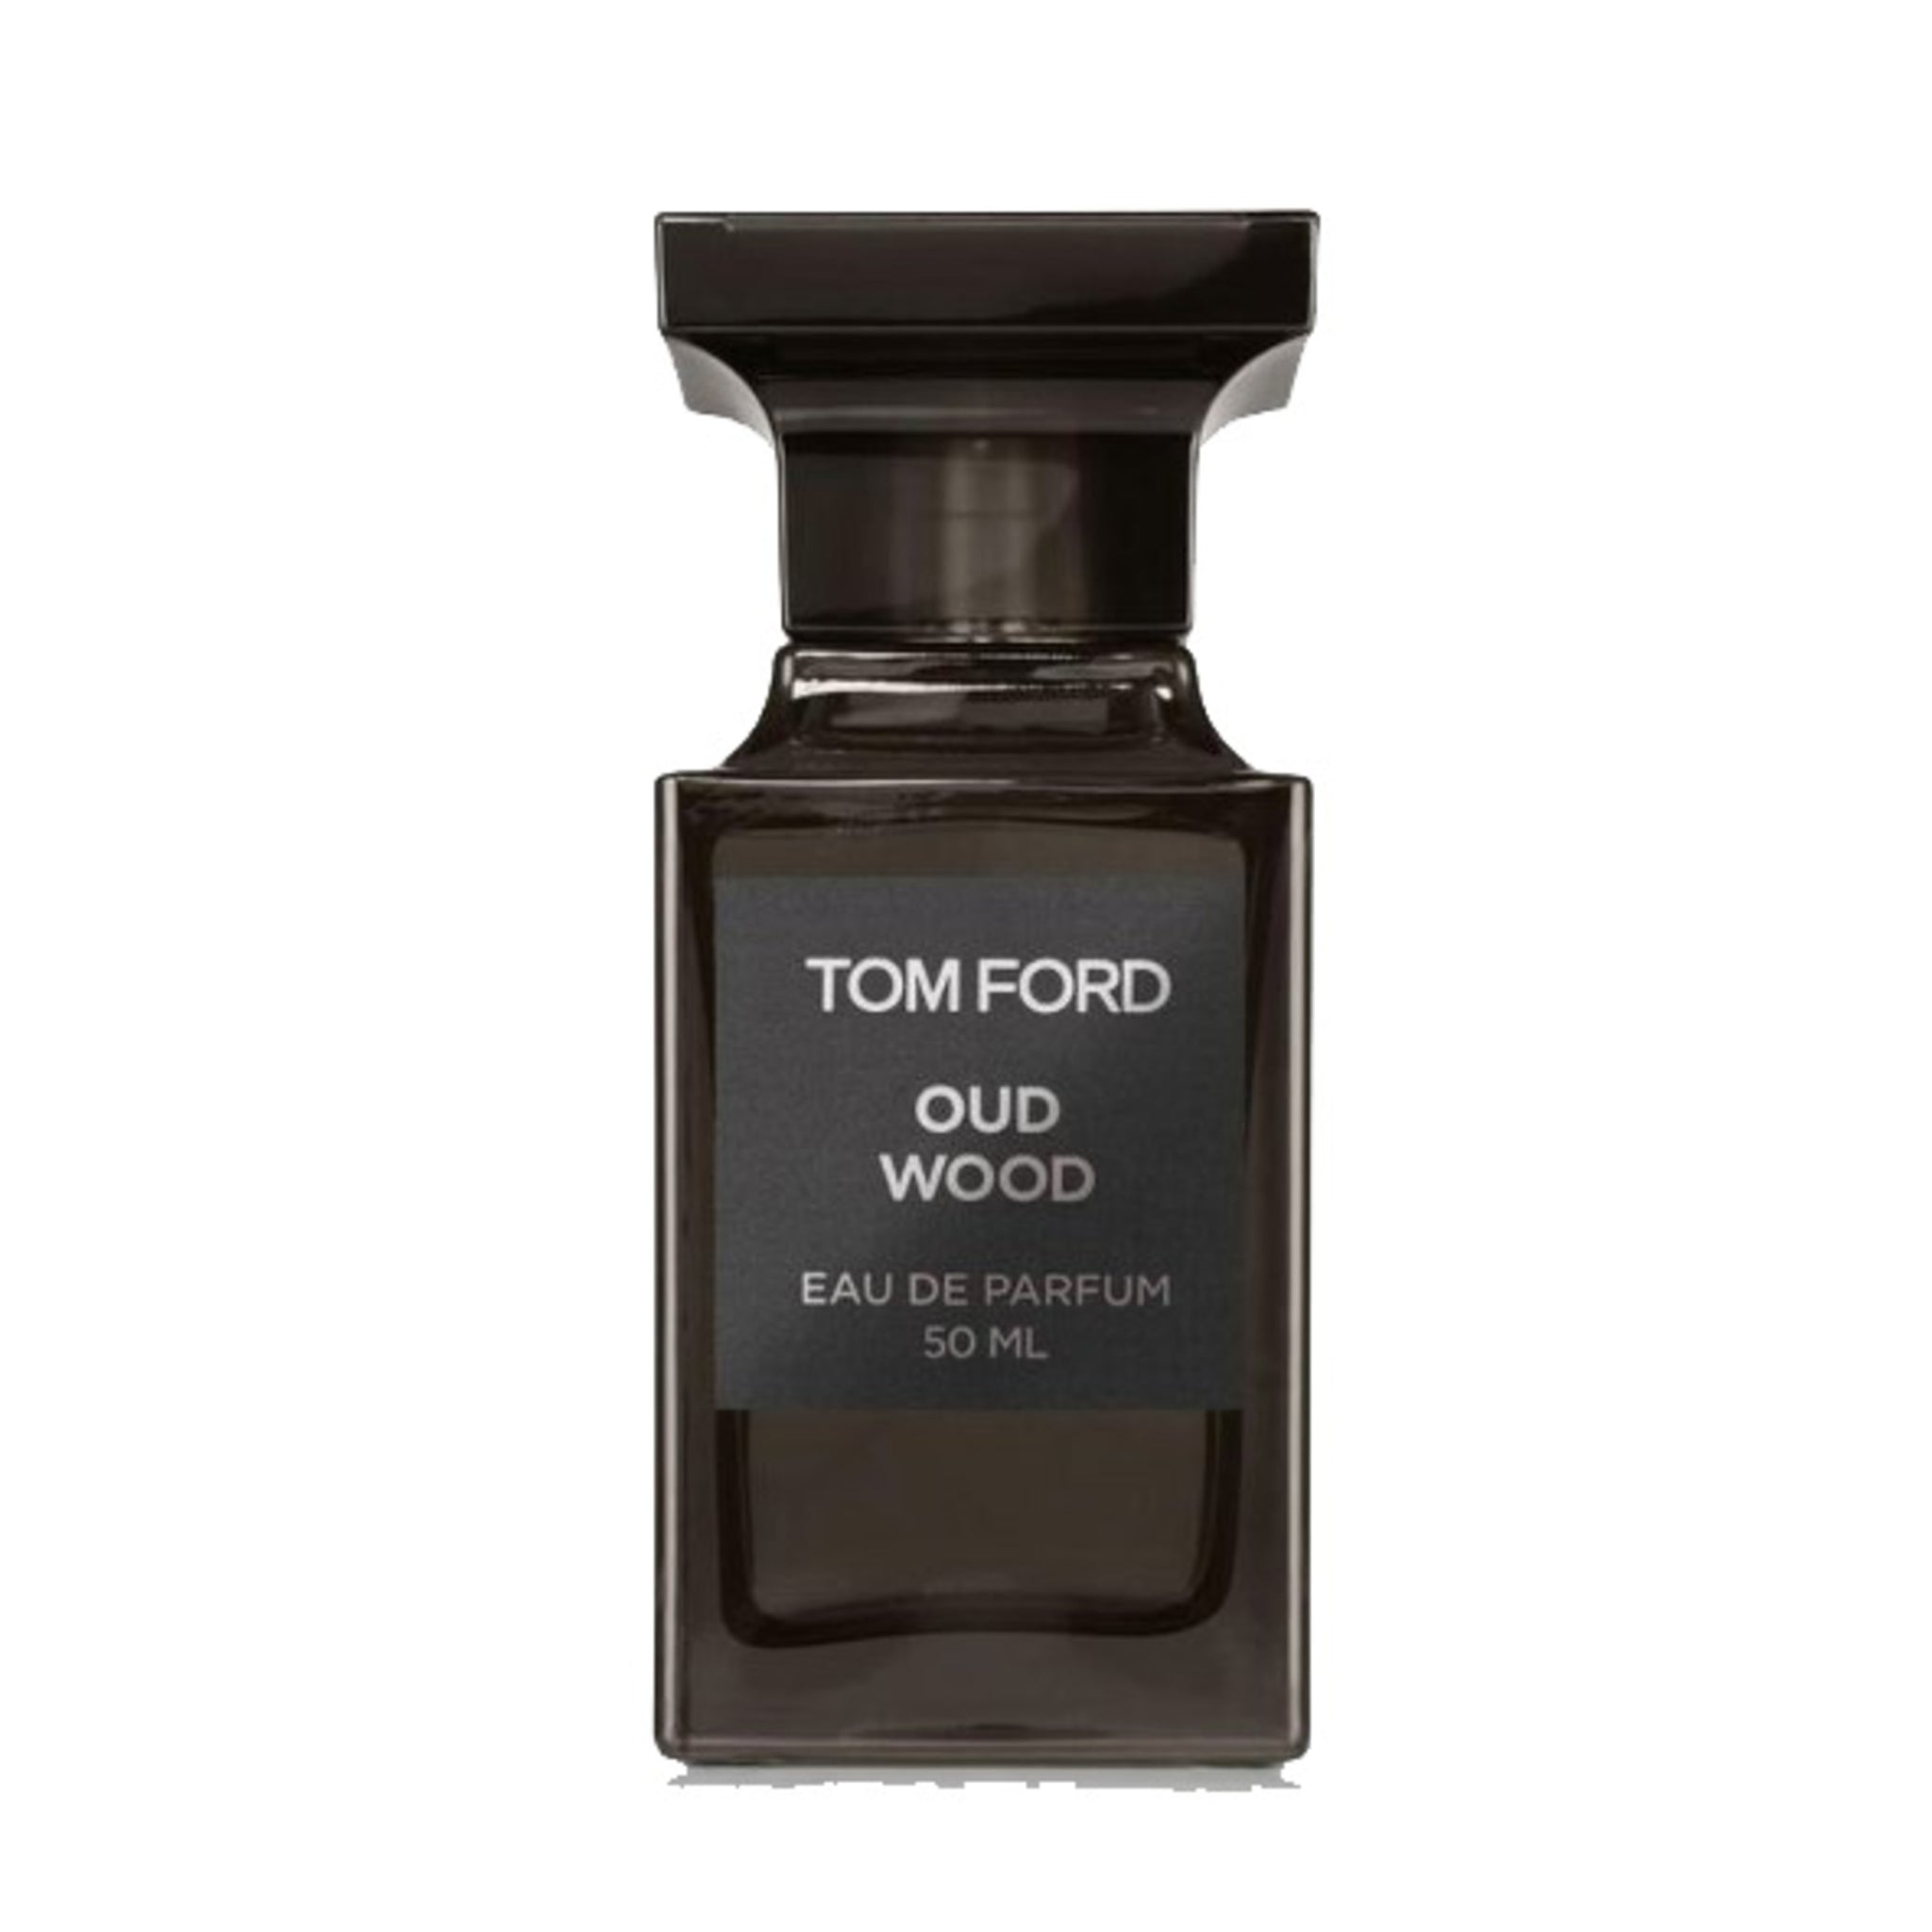 Tom Ford Oud Wood Men's Cologne